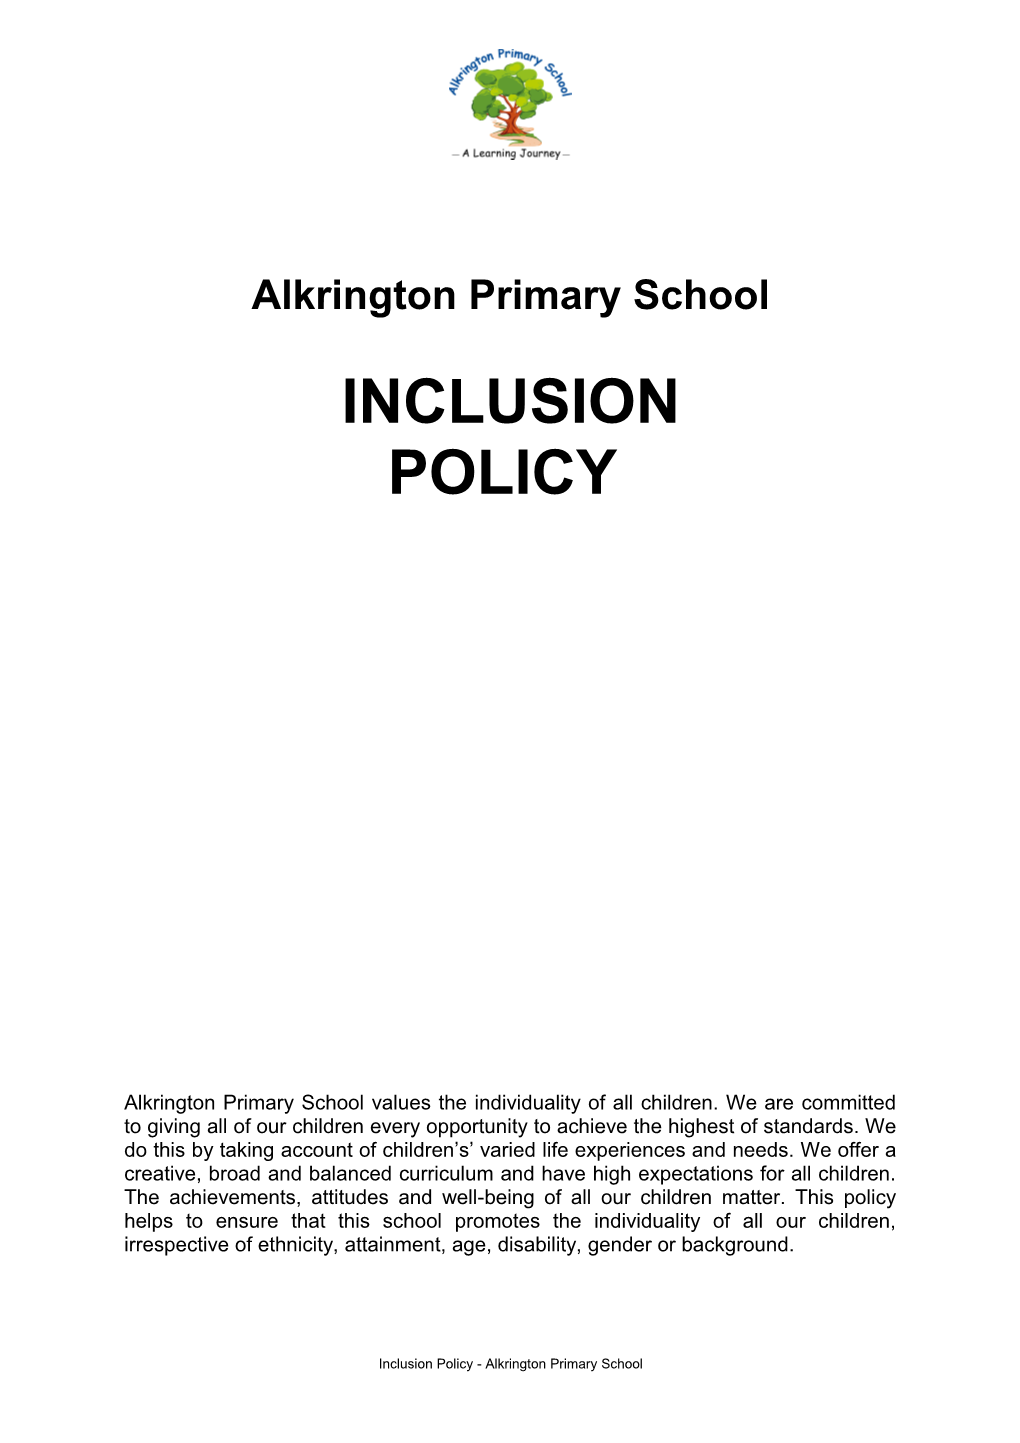 Kegworth Primary School Inclusion Policy